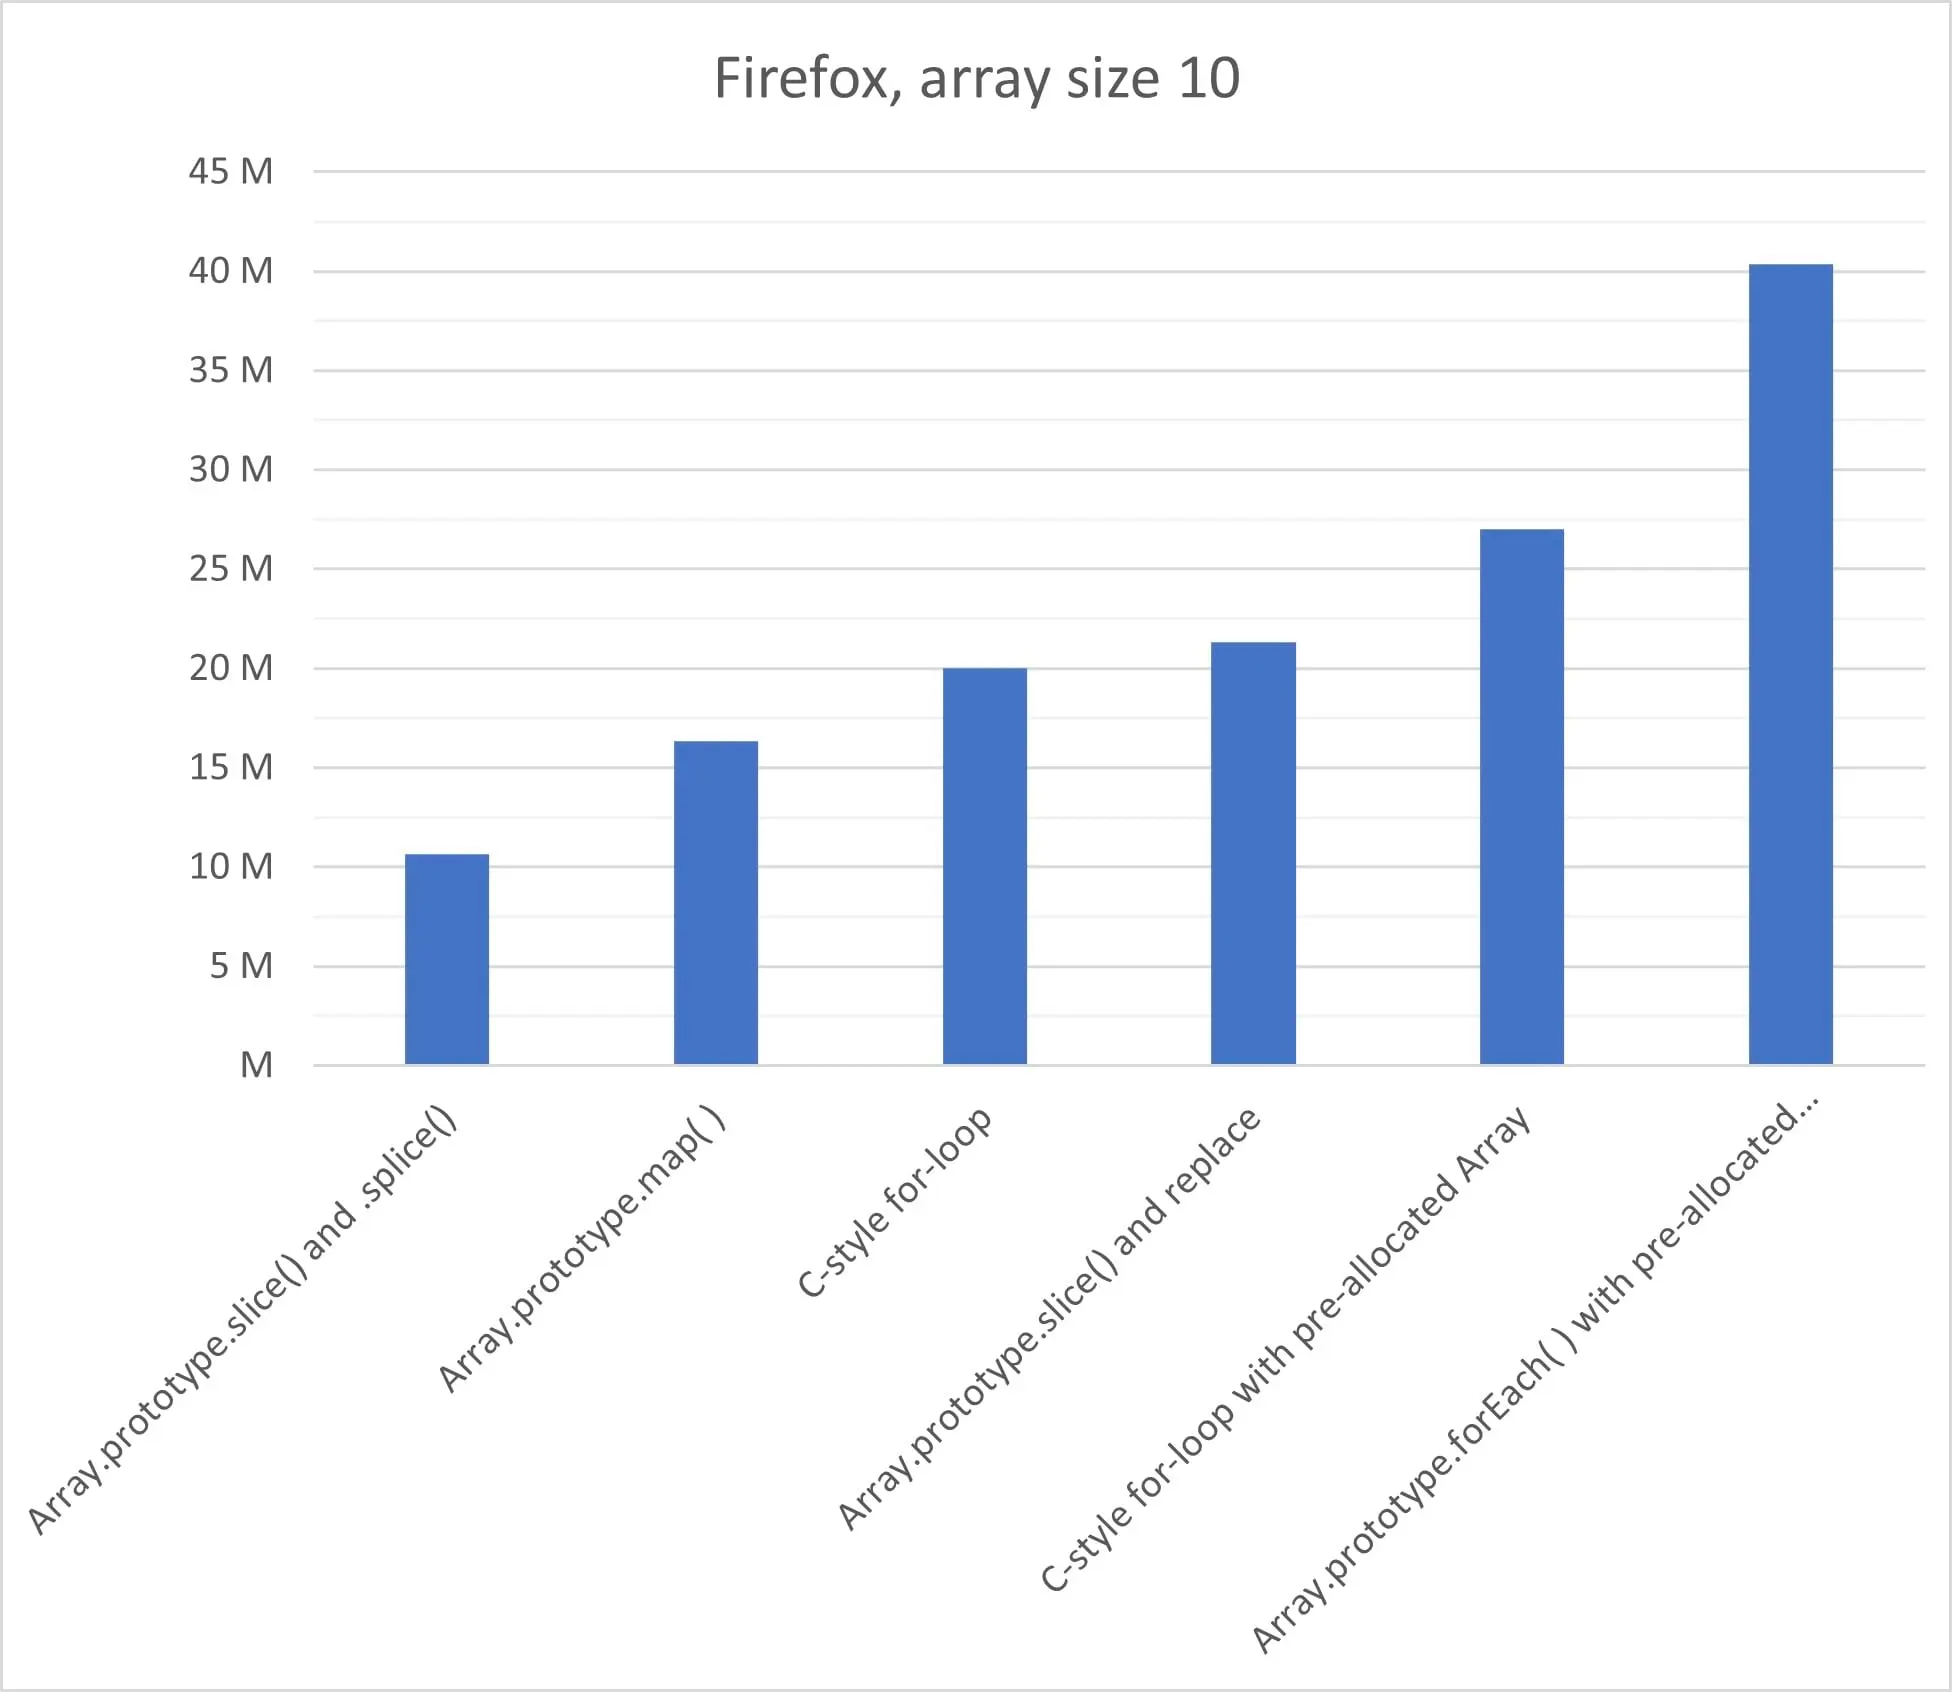 Firefox benchmark at array size 10